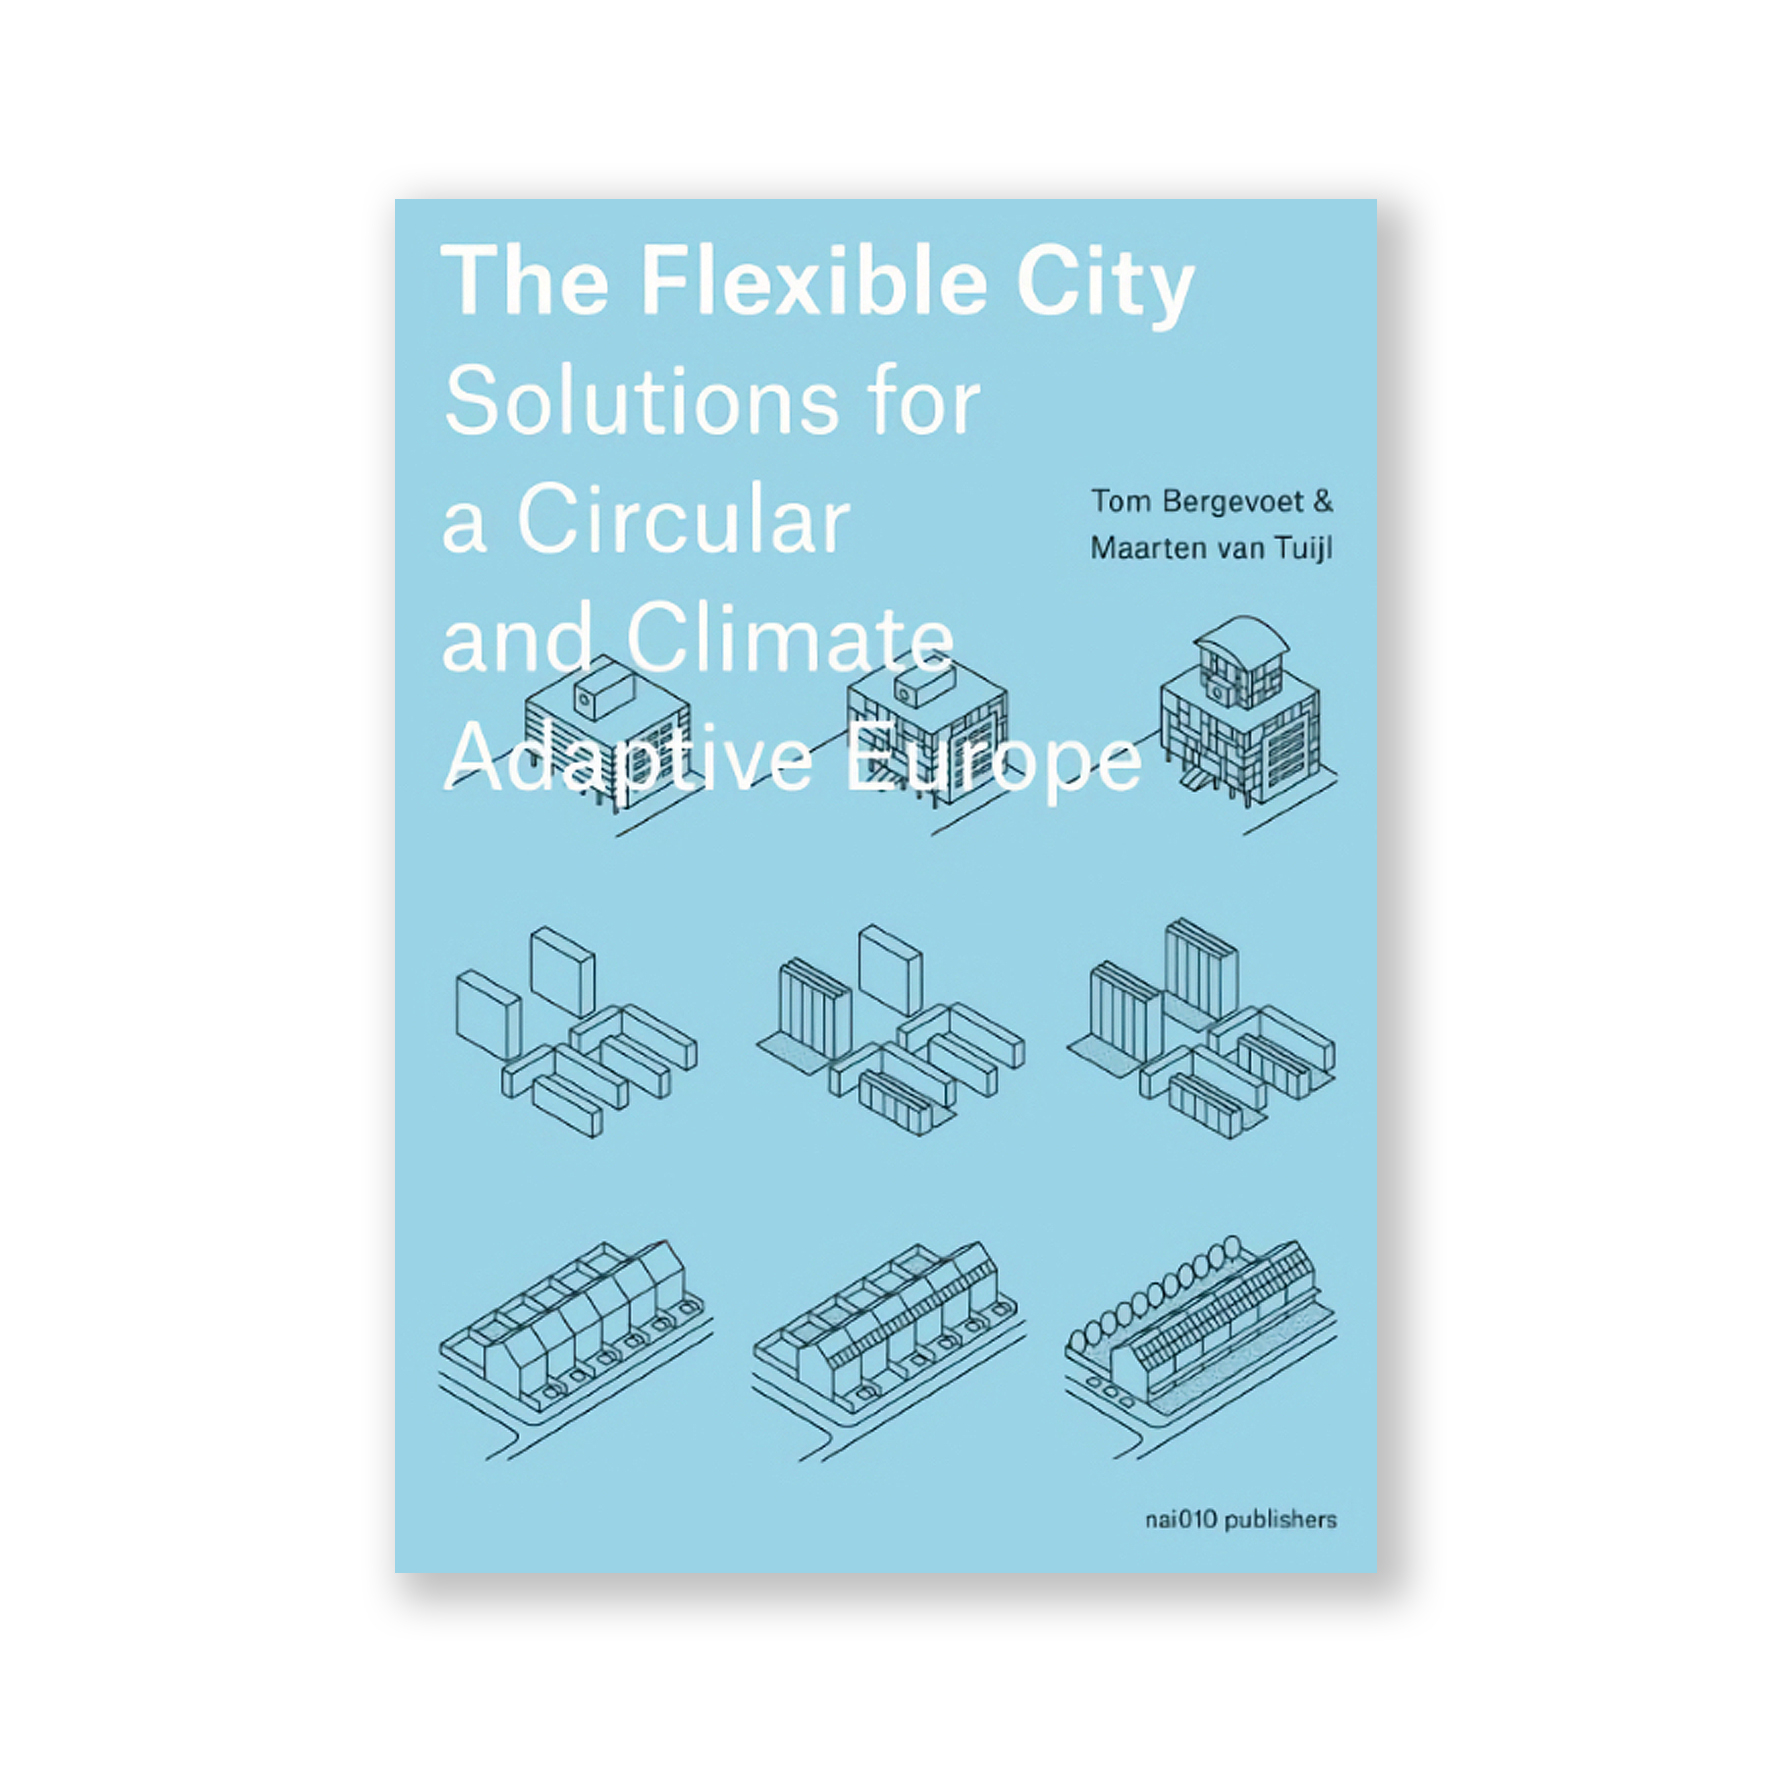 The Flexible City